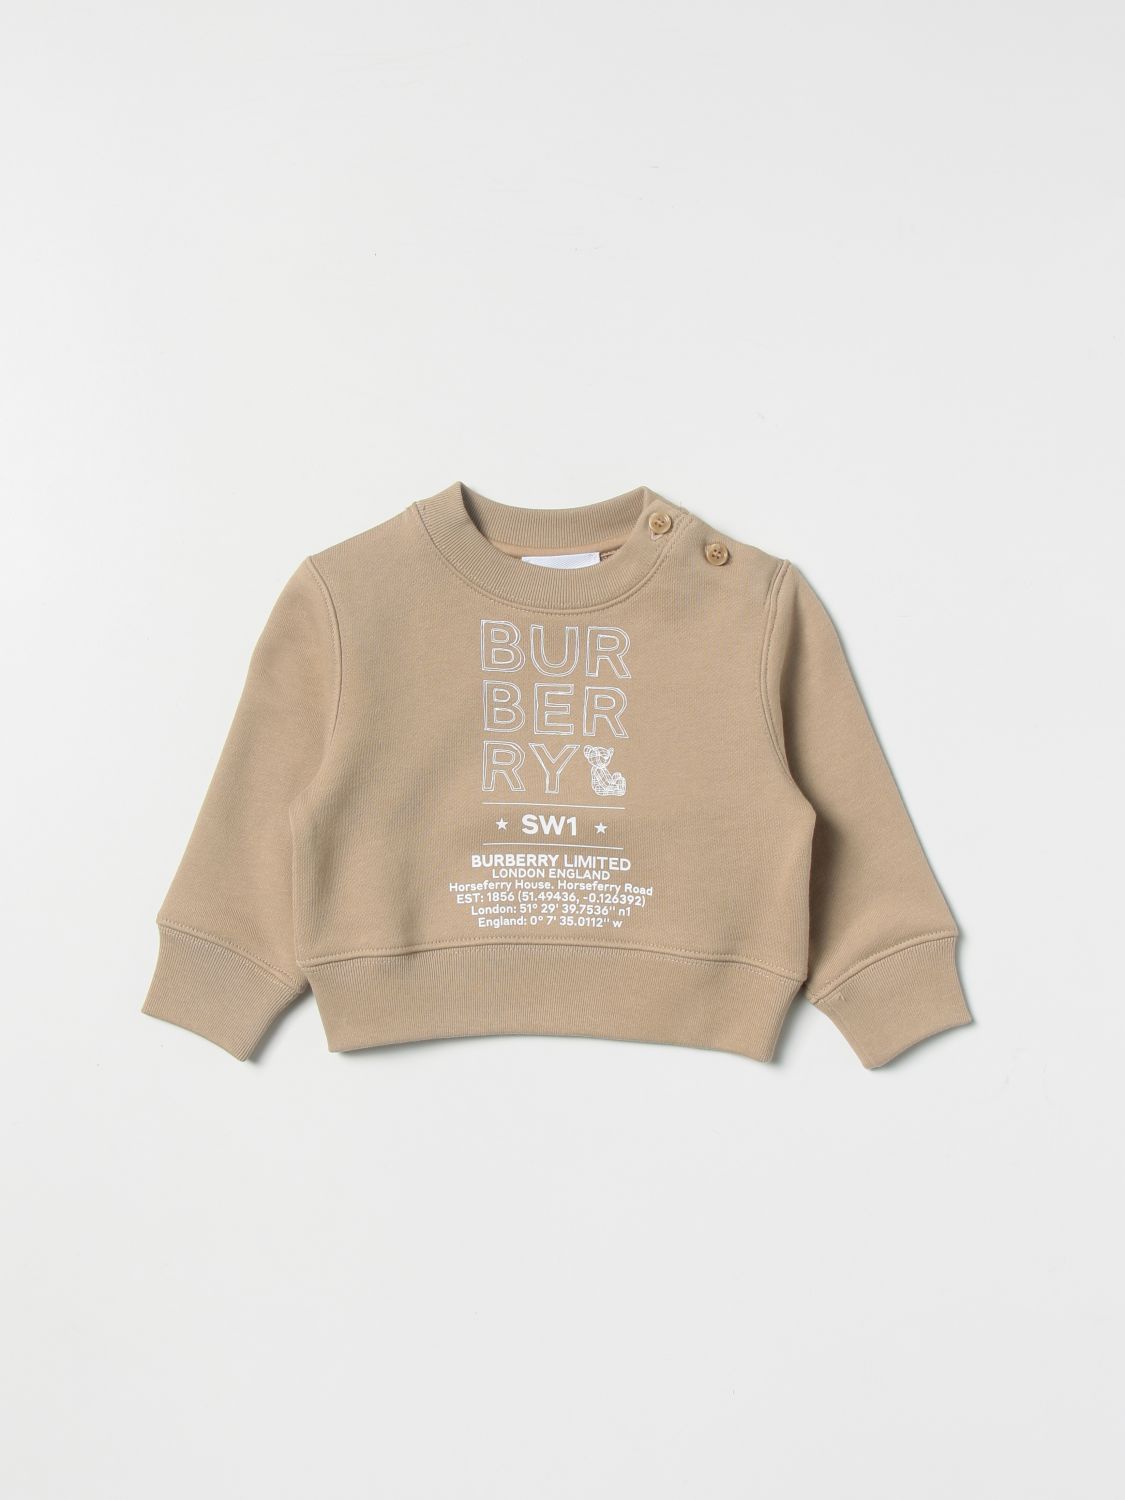 Verder litteken Staren Burberry Outlet: sweater for baby - Beige | Burberry sweater 8053820 online  on GIGLIO.COM